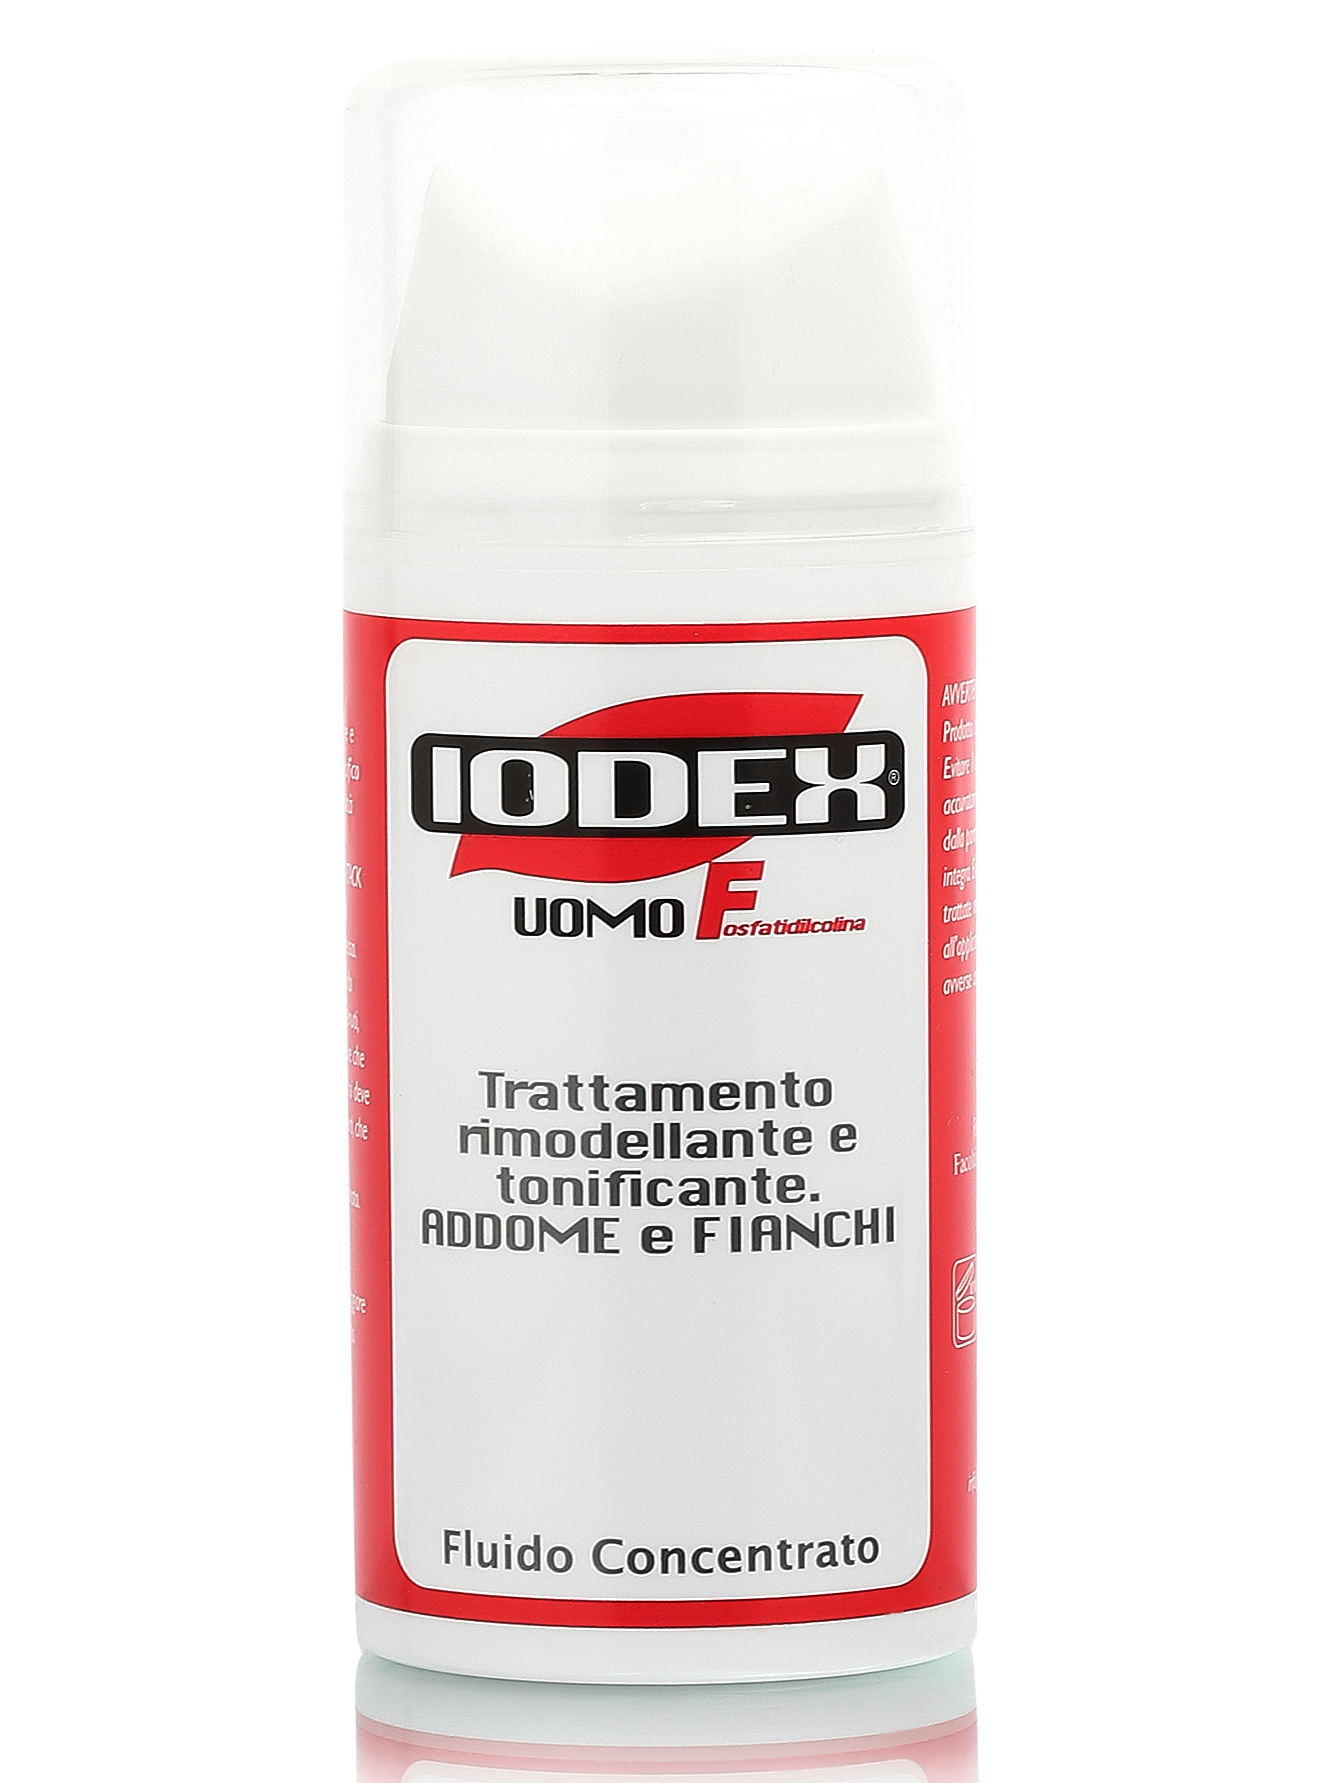  Сыворотка "Iodex Uomo  F-Fosfatidilcolina" - Body Care, 100ml - Общий вид